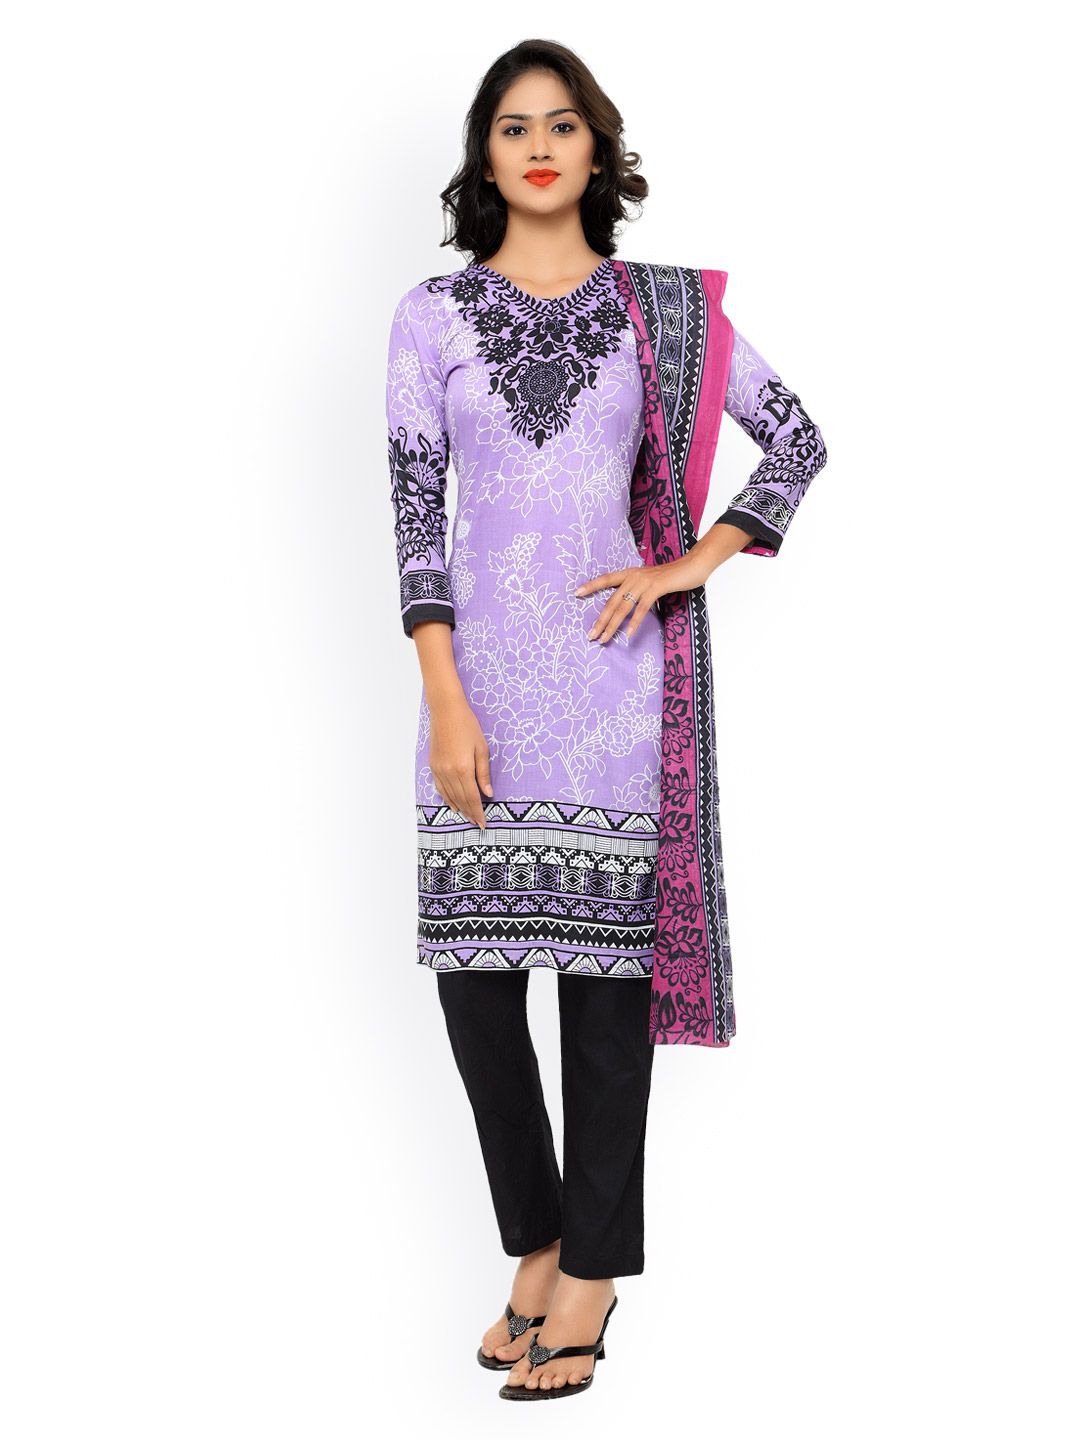 Kvsfab Purple & Black Floral Print Unstitched Dress Material Price in India